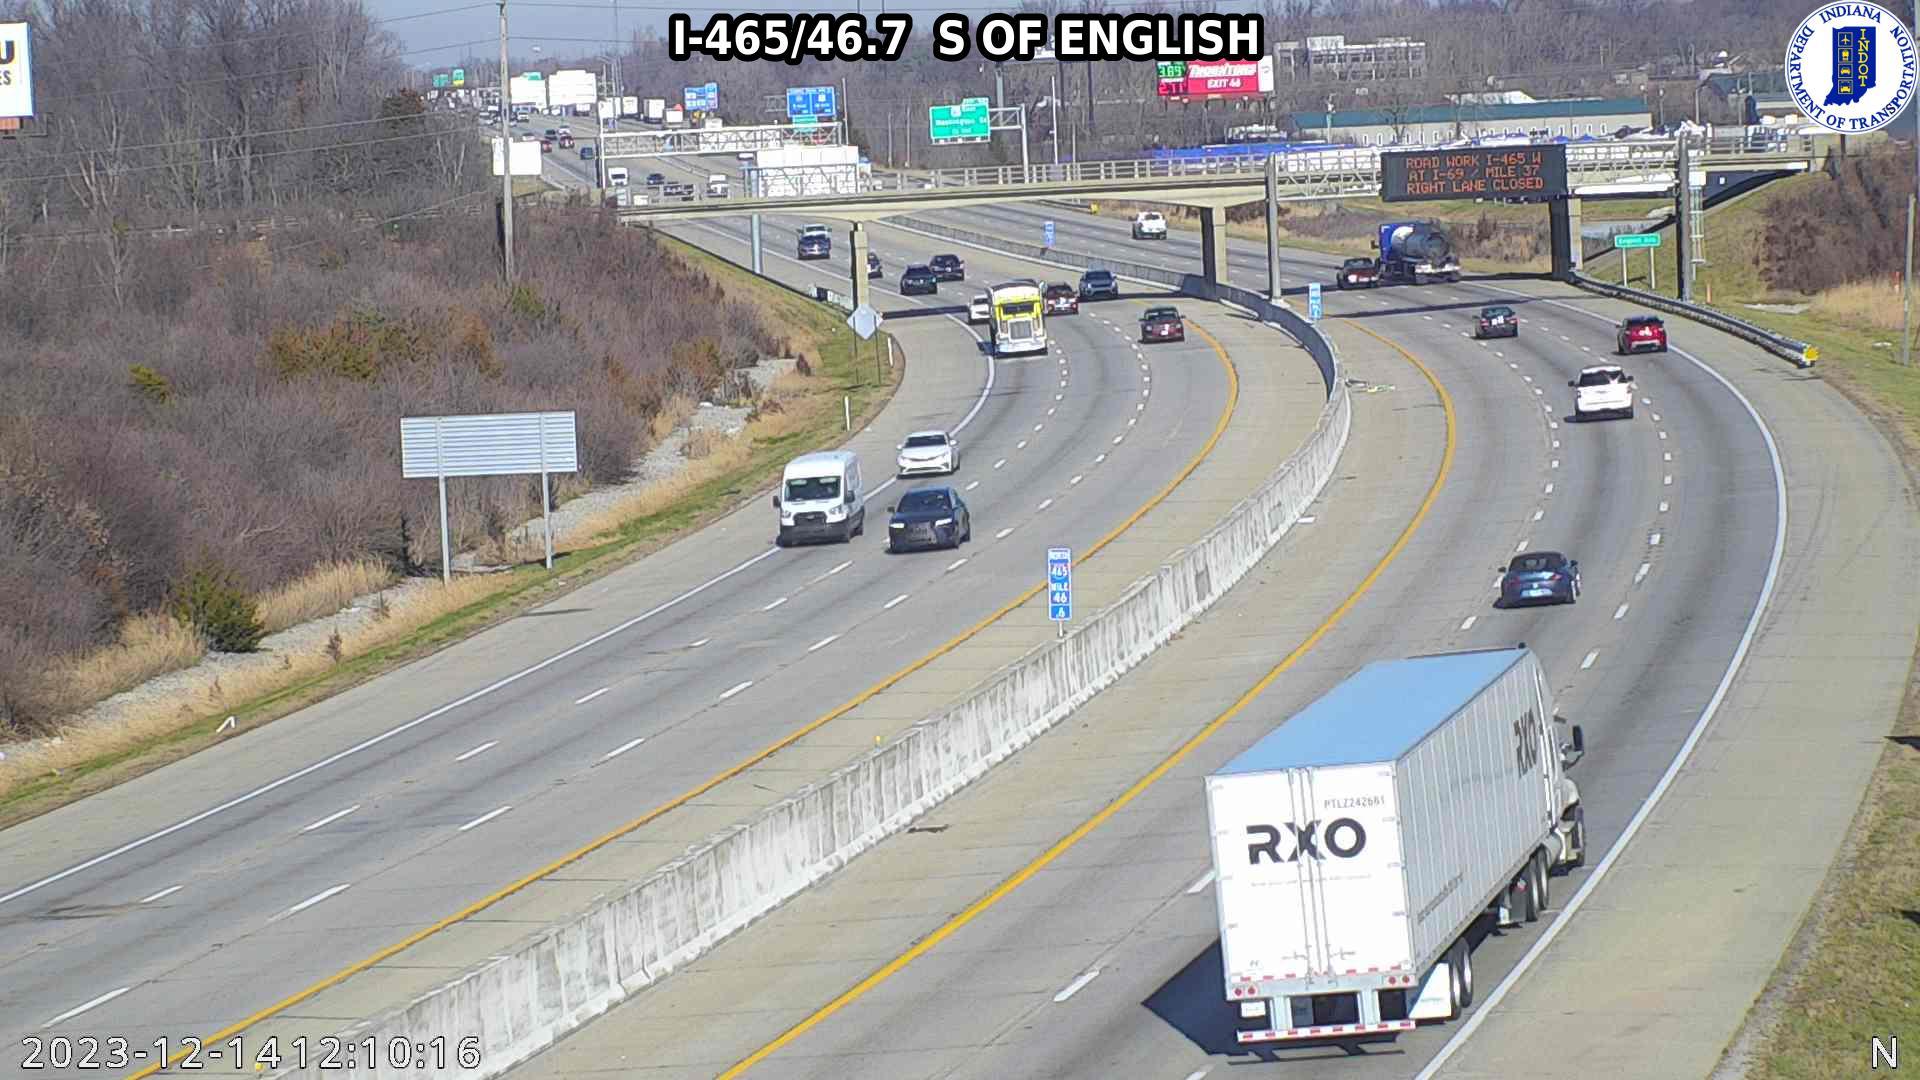 Indianapolis: I-465: I-465/46.7 S OF ENGLISH Traffic Camera